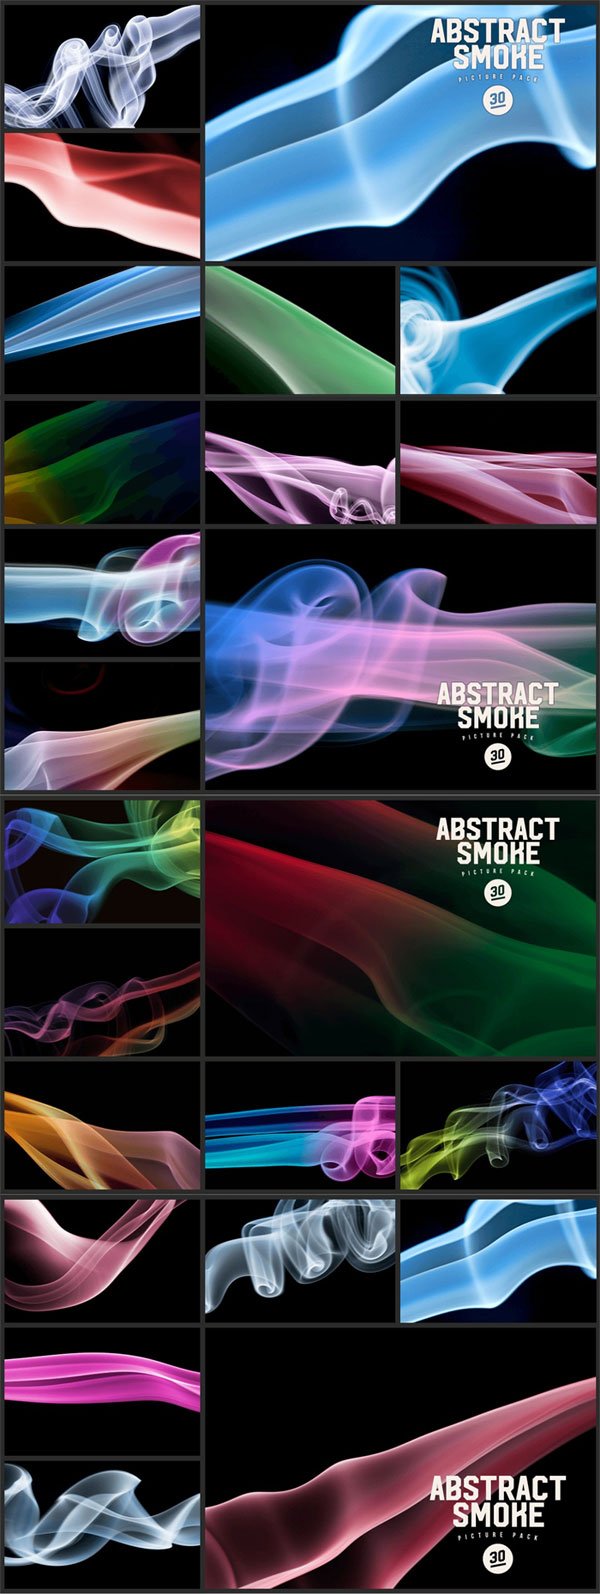 Abstract Smoke Photo Pack